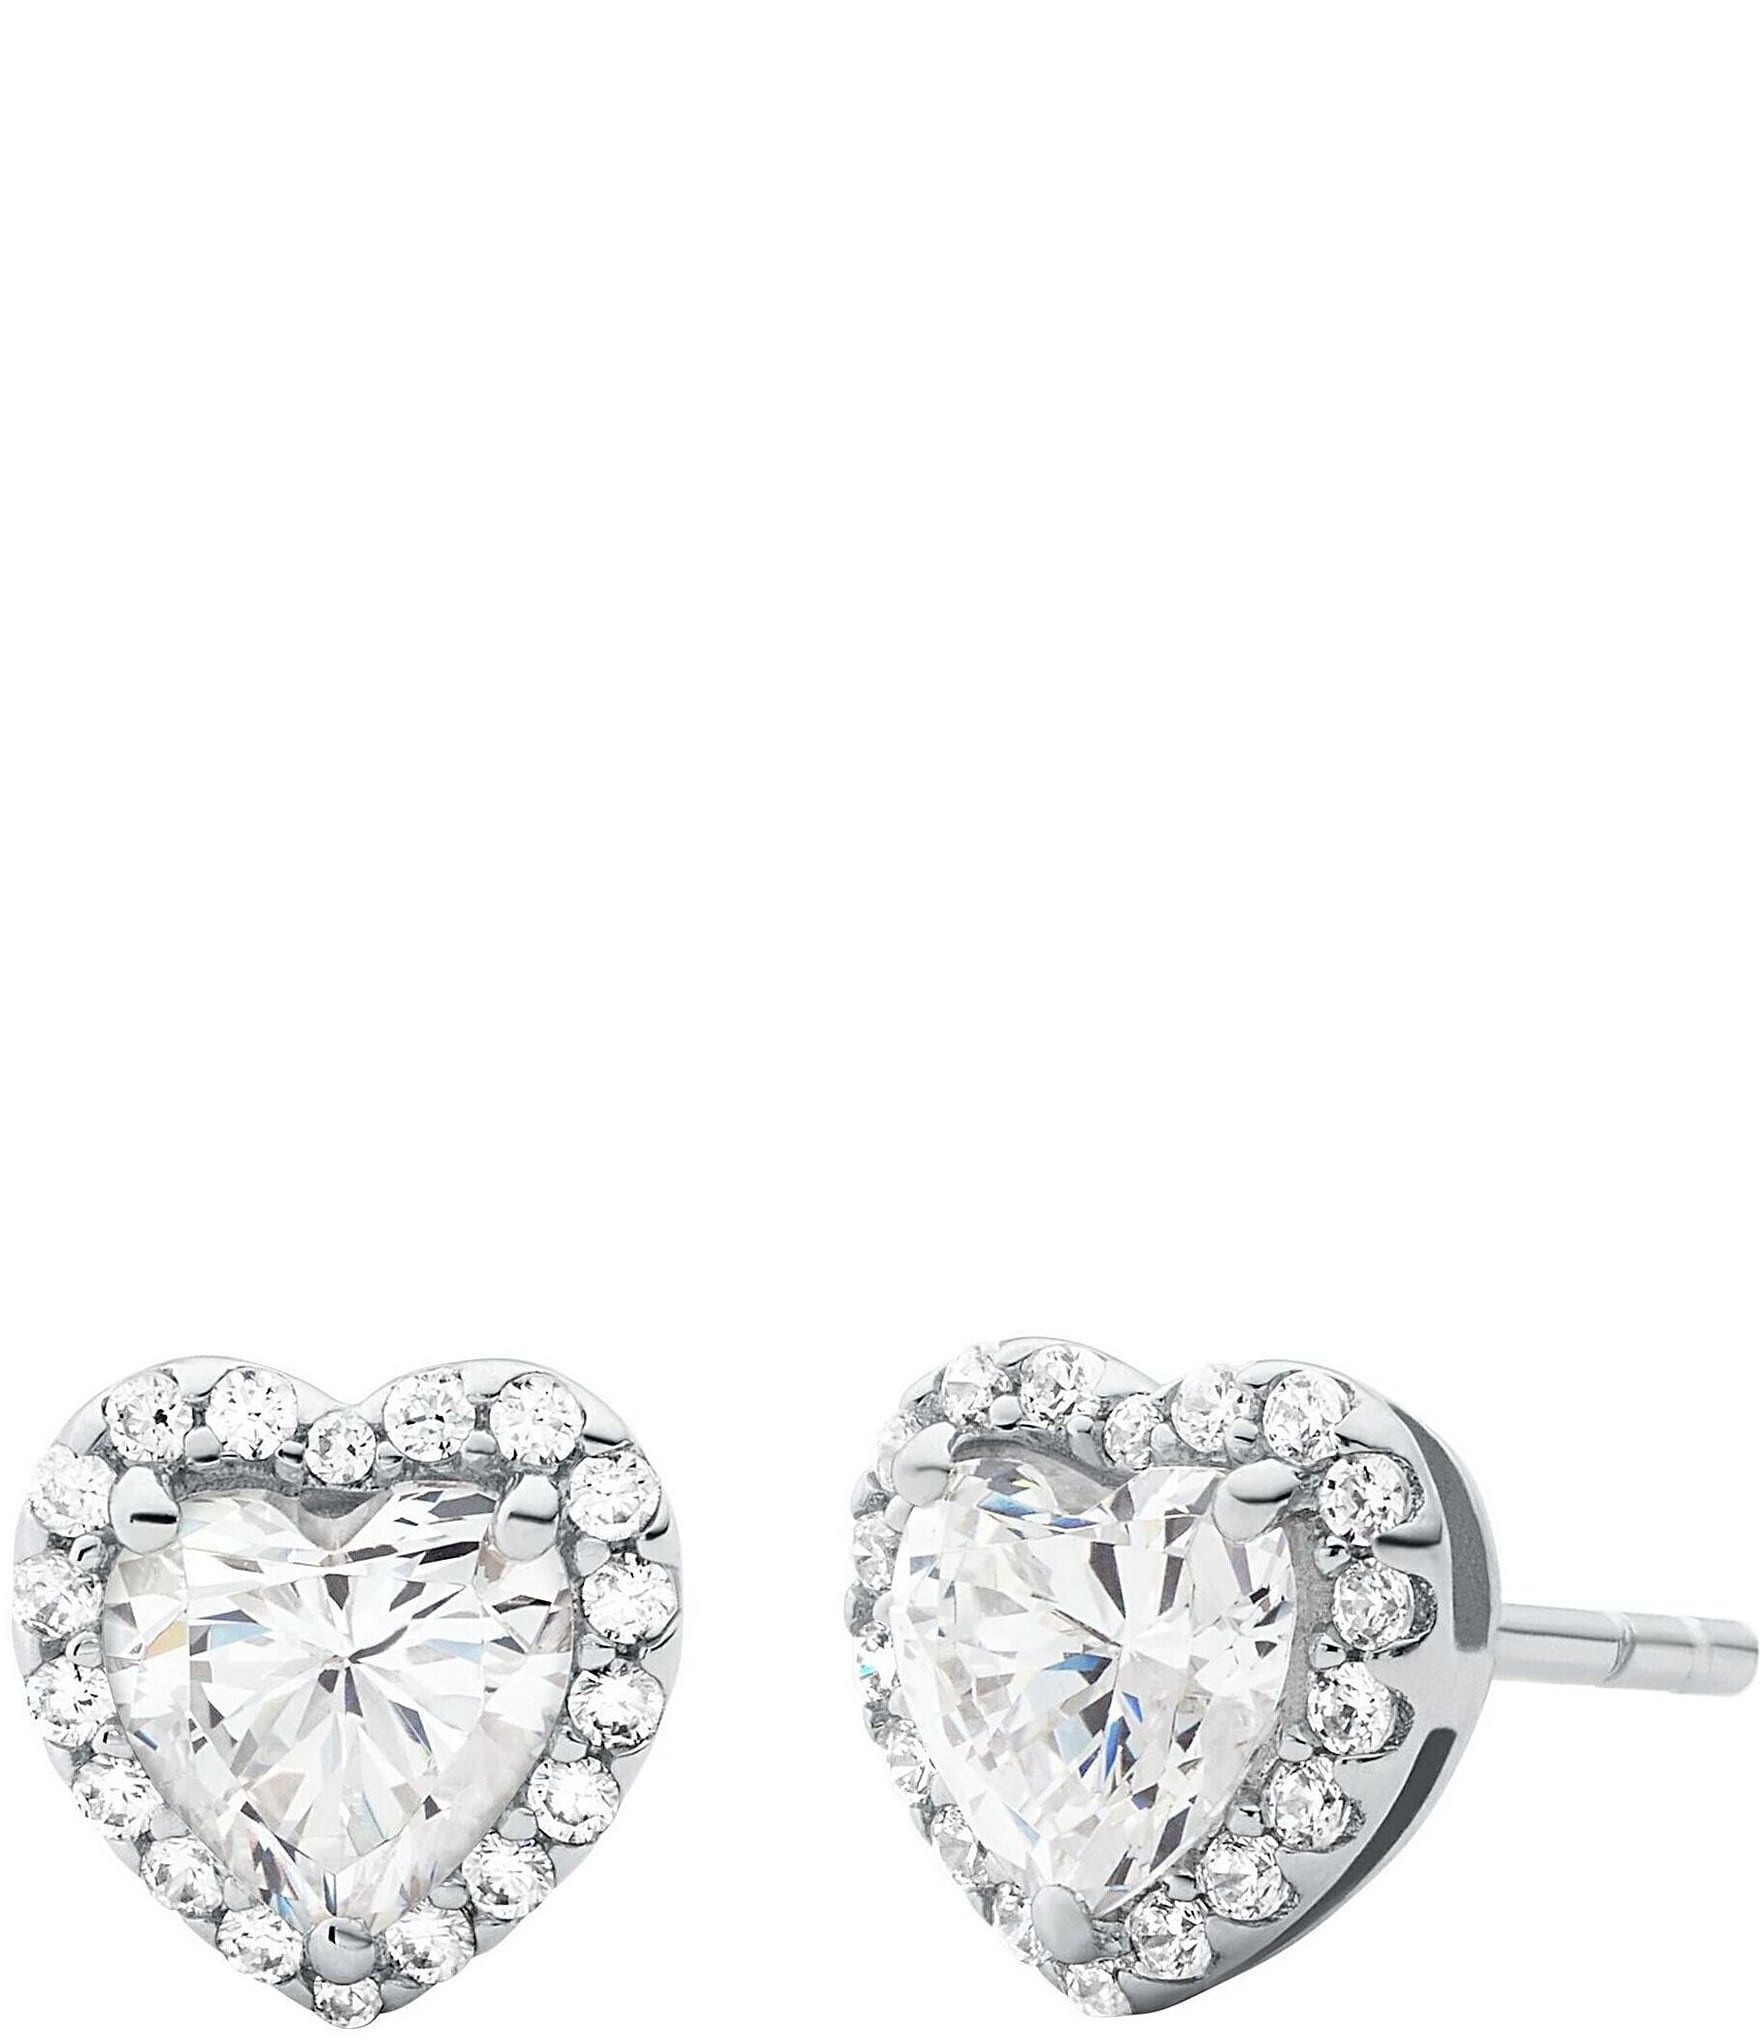 Michael Kors Crystal Heart Stud Earrings - Rose Gold-Tone Metal Stud,  Earrings - MIC201450 | The RealReal